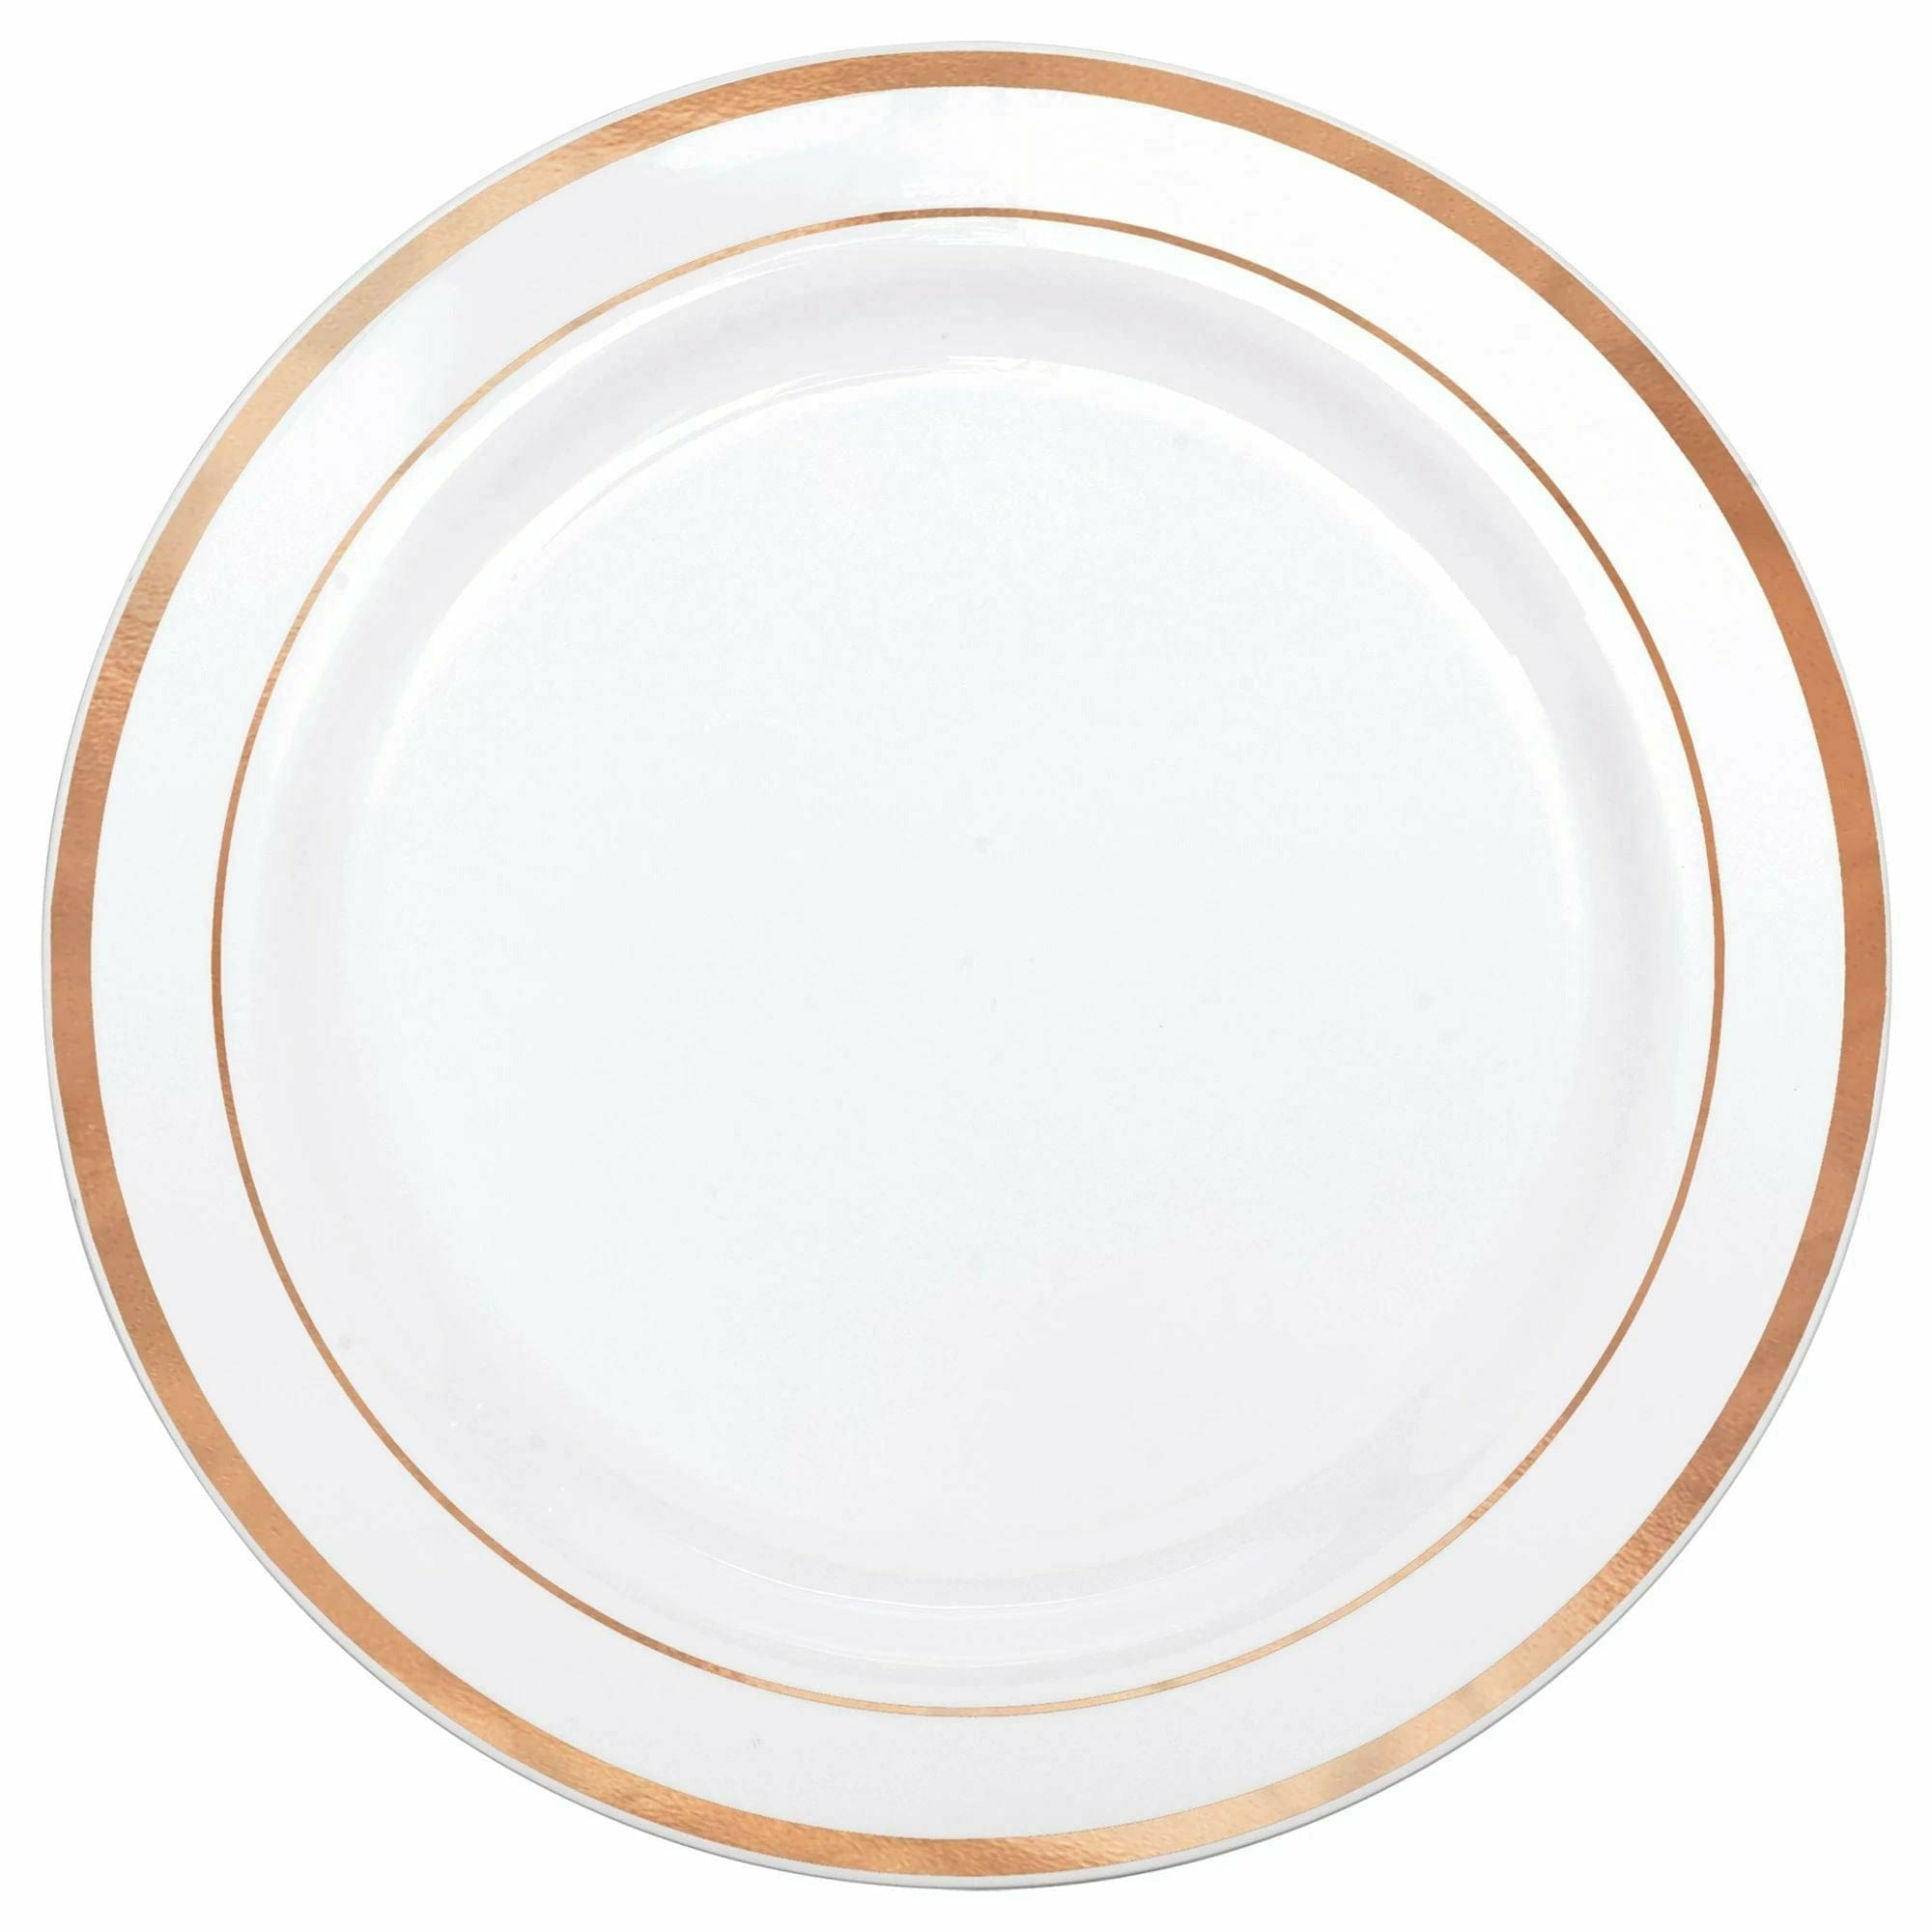 Amscan BASIC Appetizer Plastic Plate, 6 1/4" - White w/ Rose Gold Trim